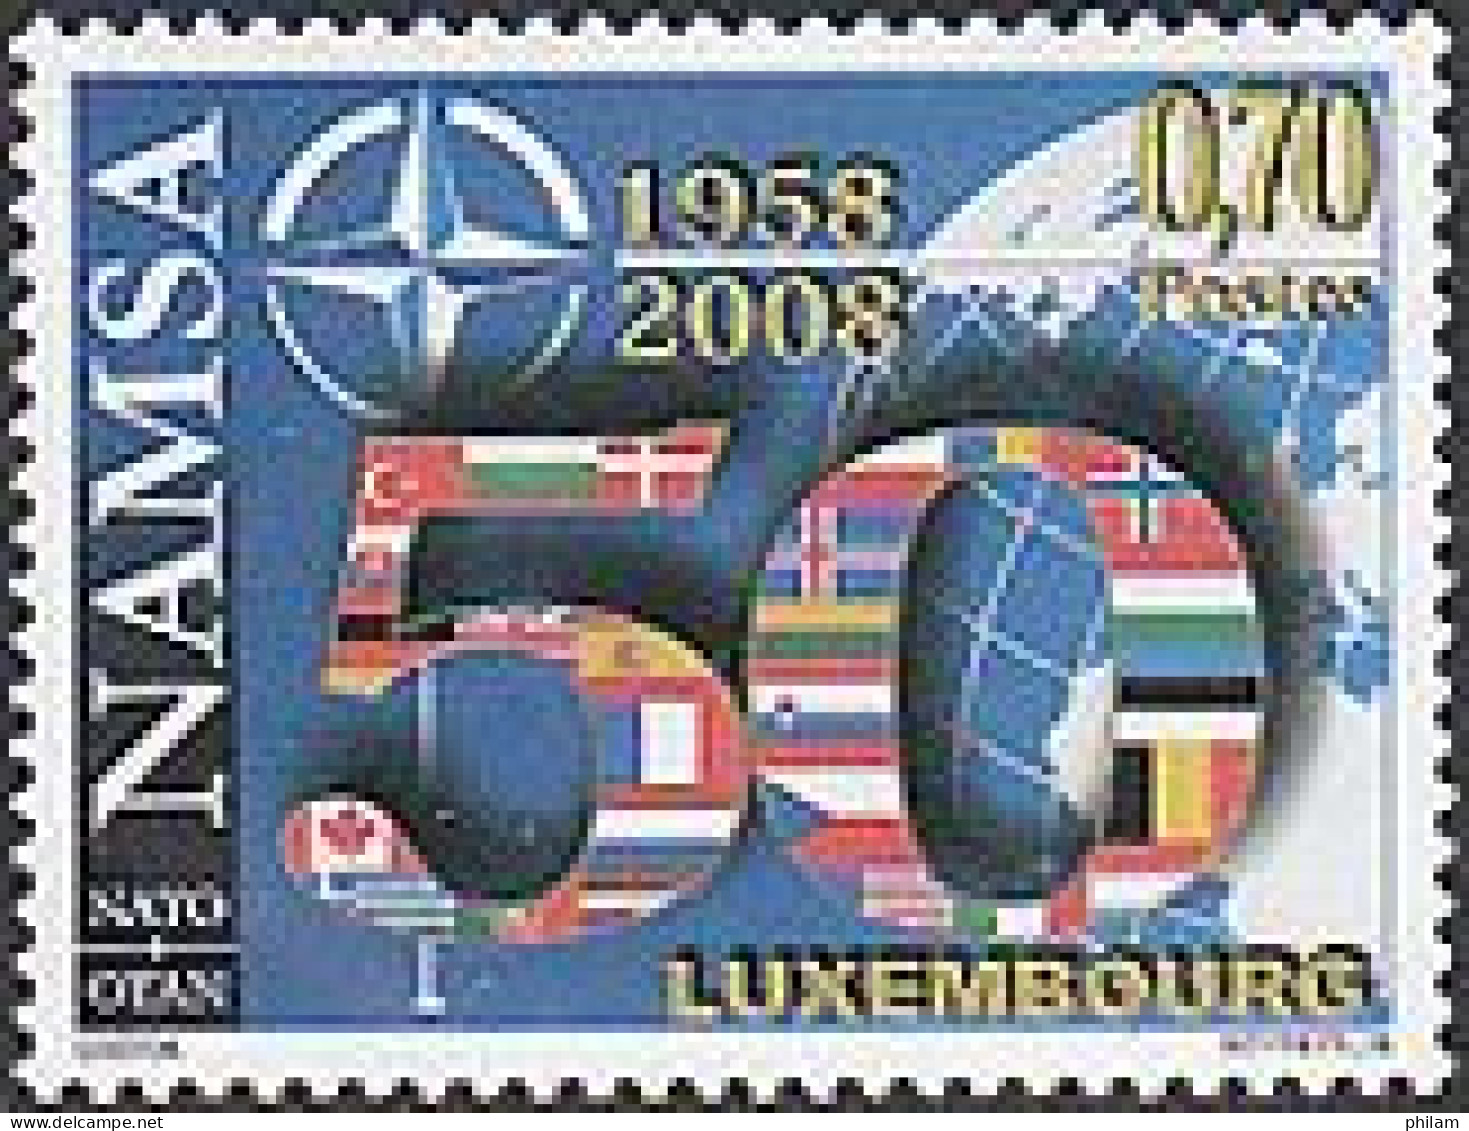 LUXEMBOURG 2008 - 50ème Anniversaire De La NAMSA (OTAN) - 1 V. - Nuevos